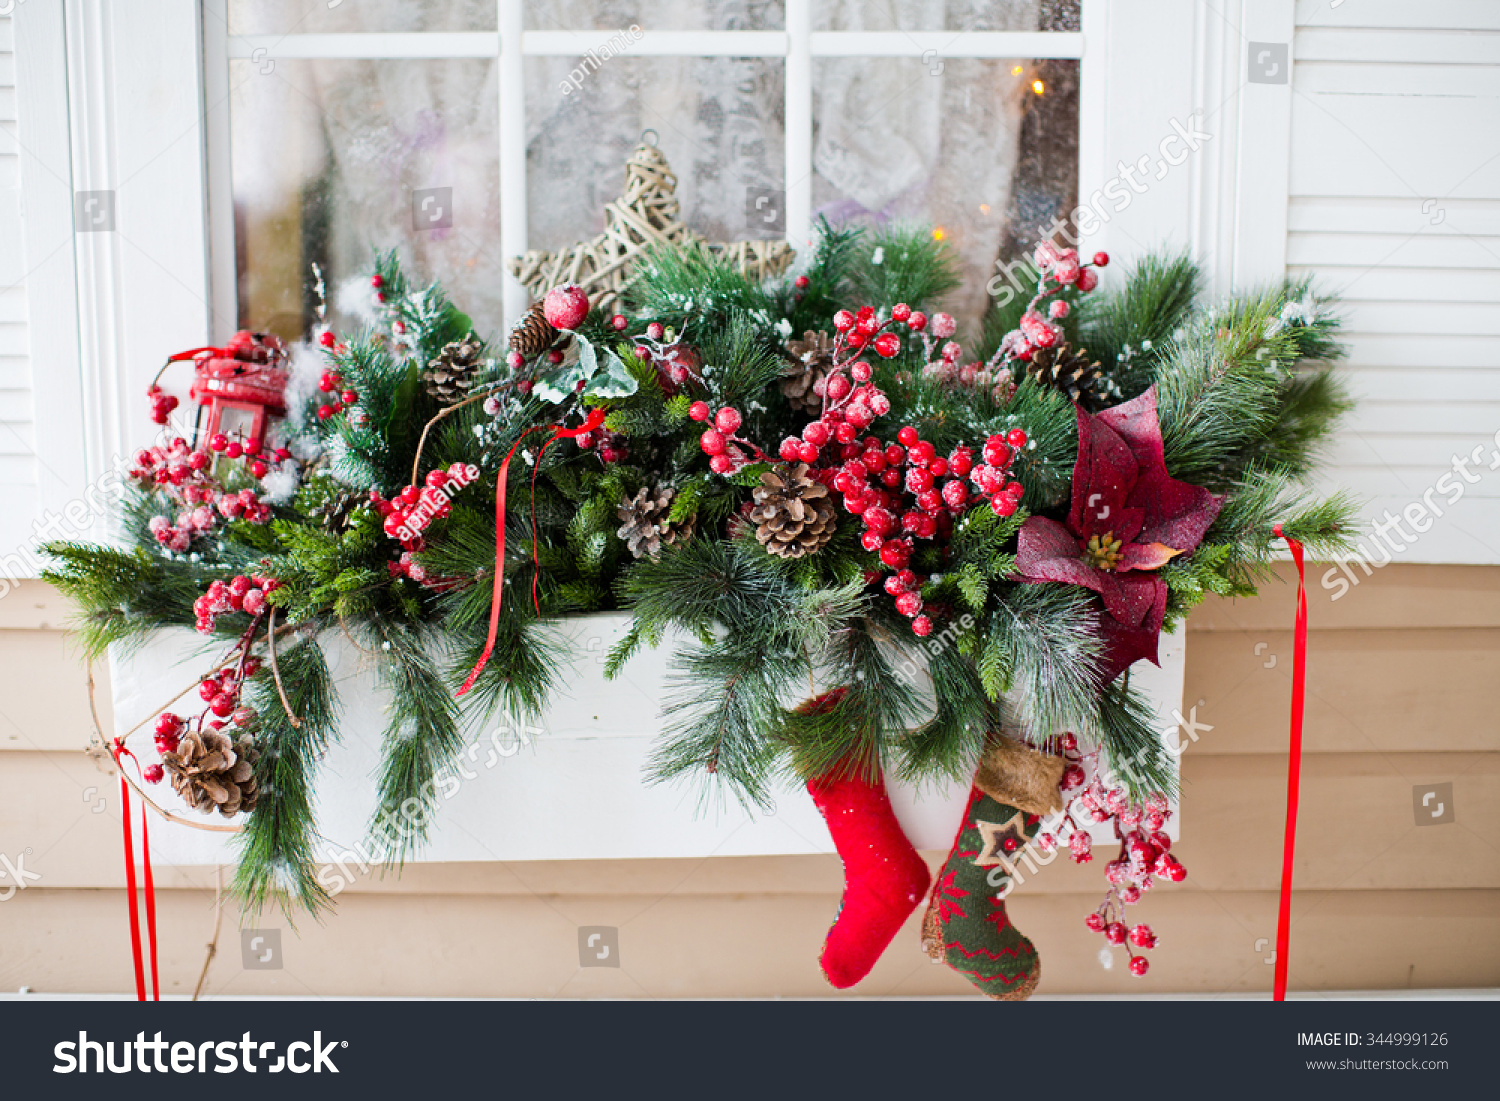 Christmas Decorations On Window Sill Stock Photo 344999126  Shutterstock